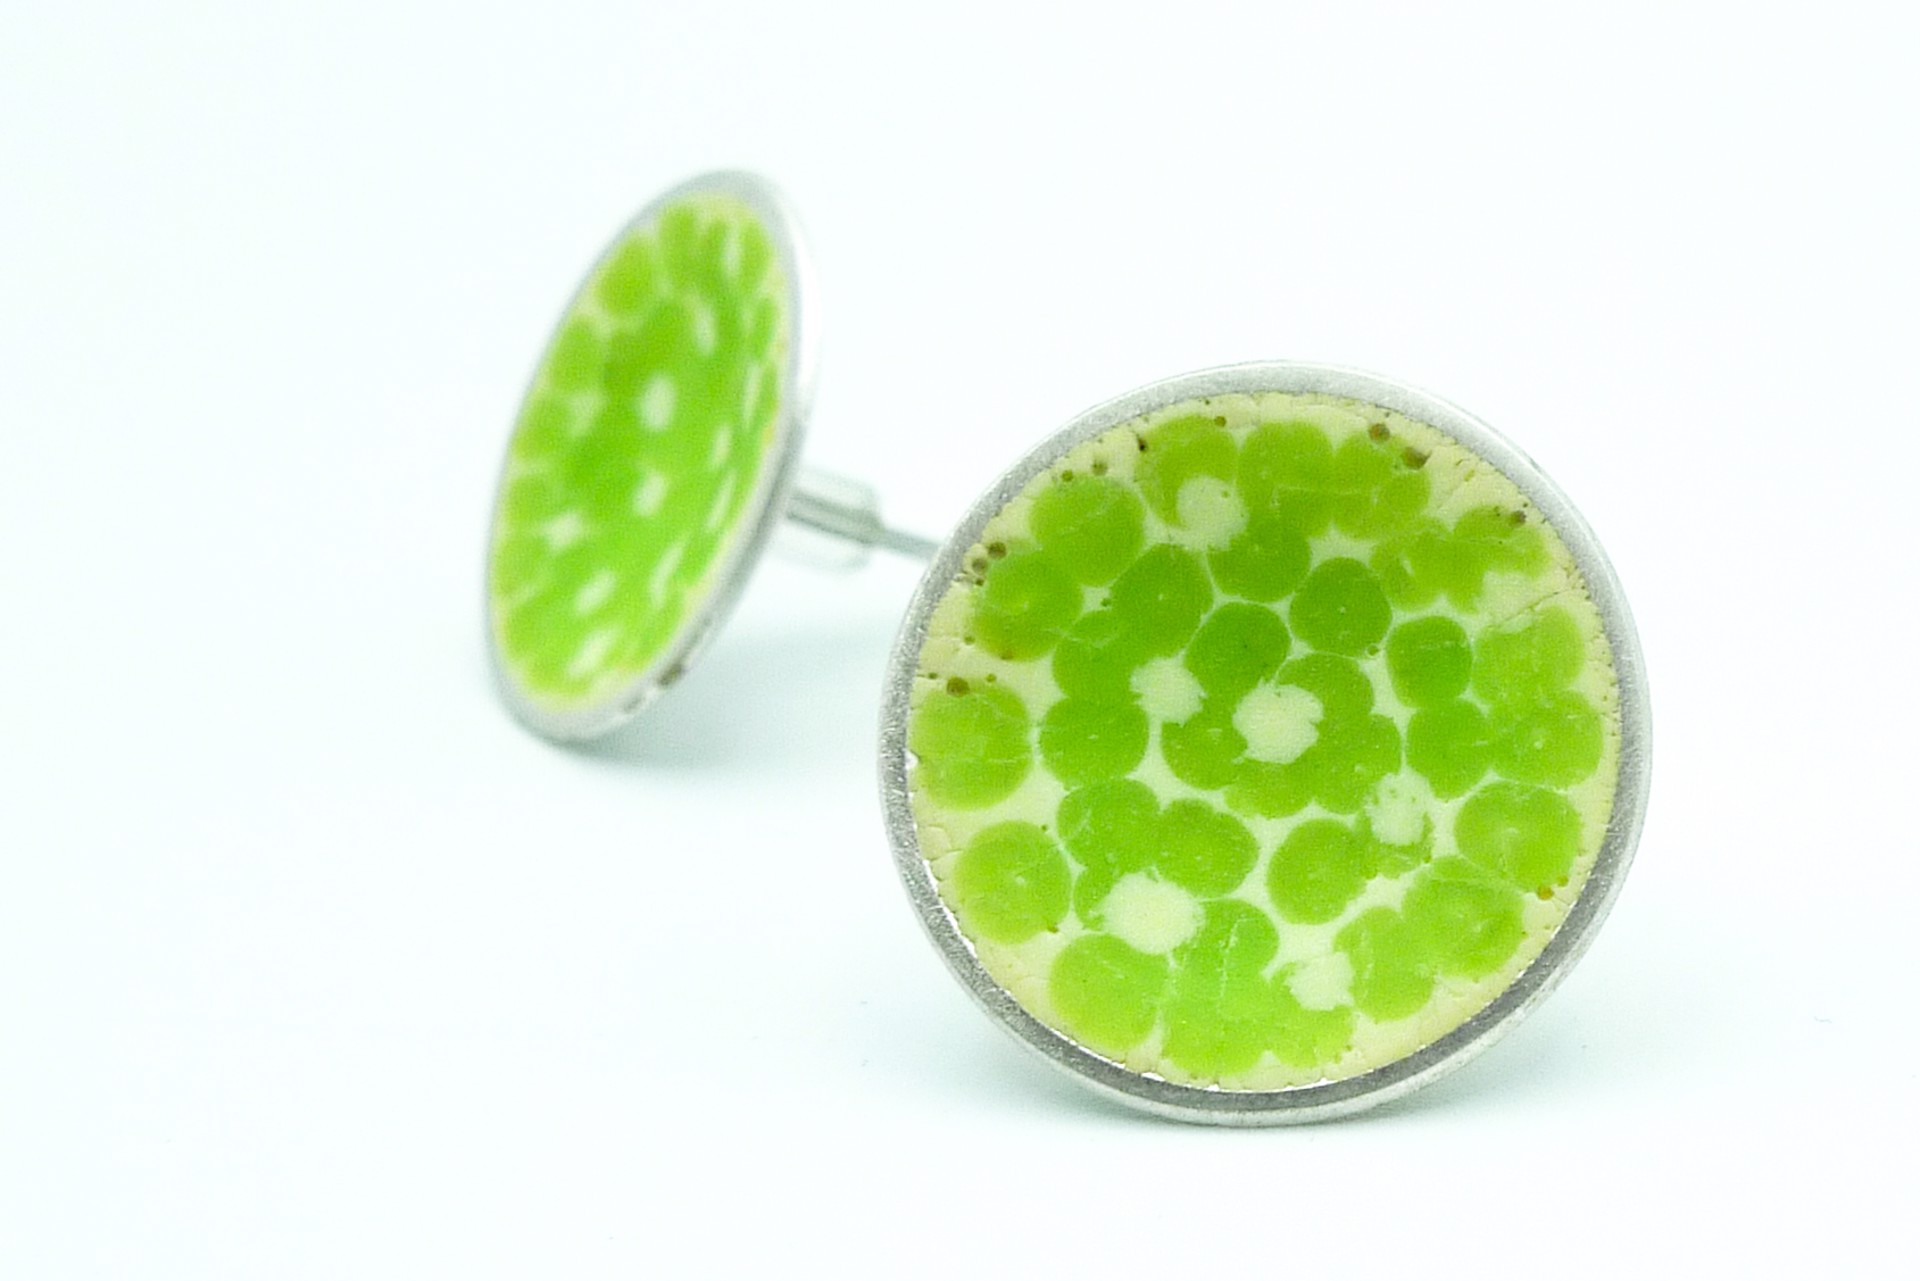 Earrings in Lime Green by Jessica Calderwood